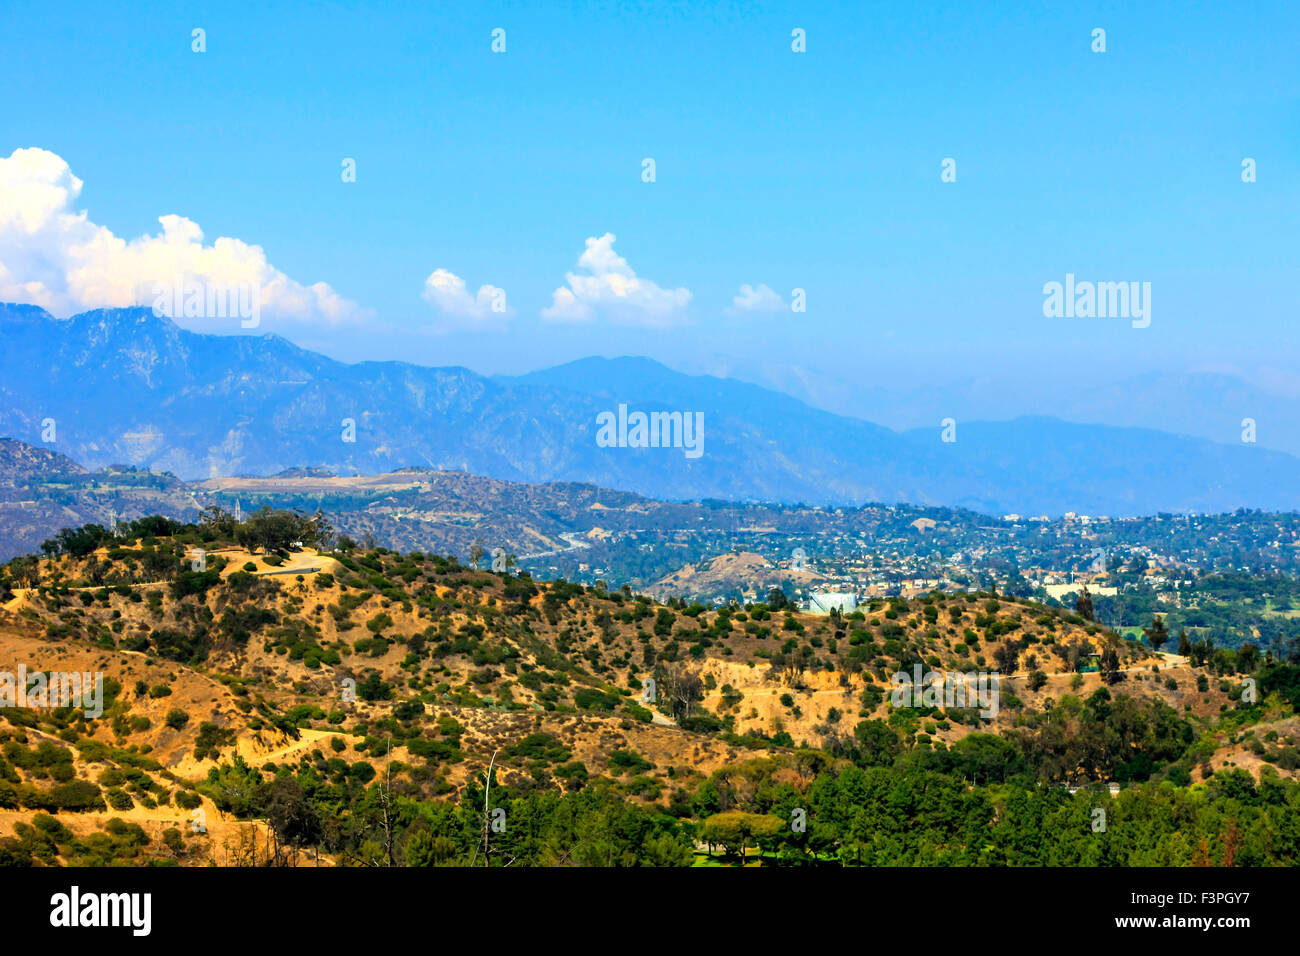 View of Mt Wilson and the Deukmejian Wilderness Park East of Los Angeles CA Stock Photo